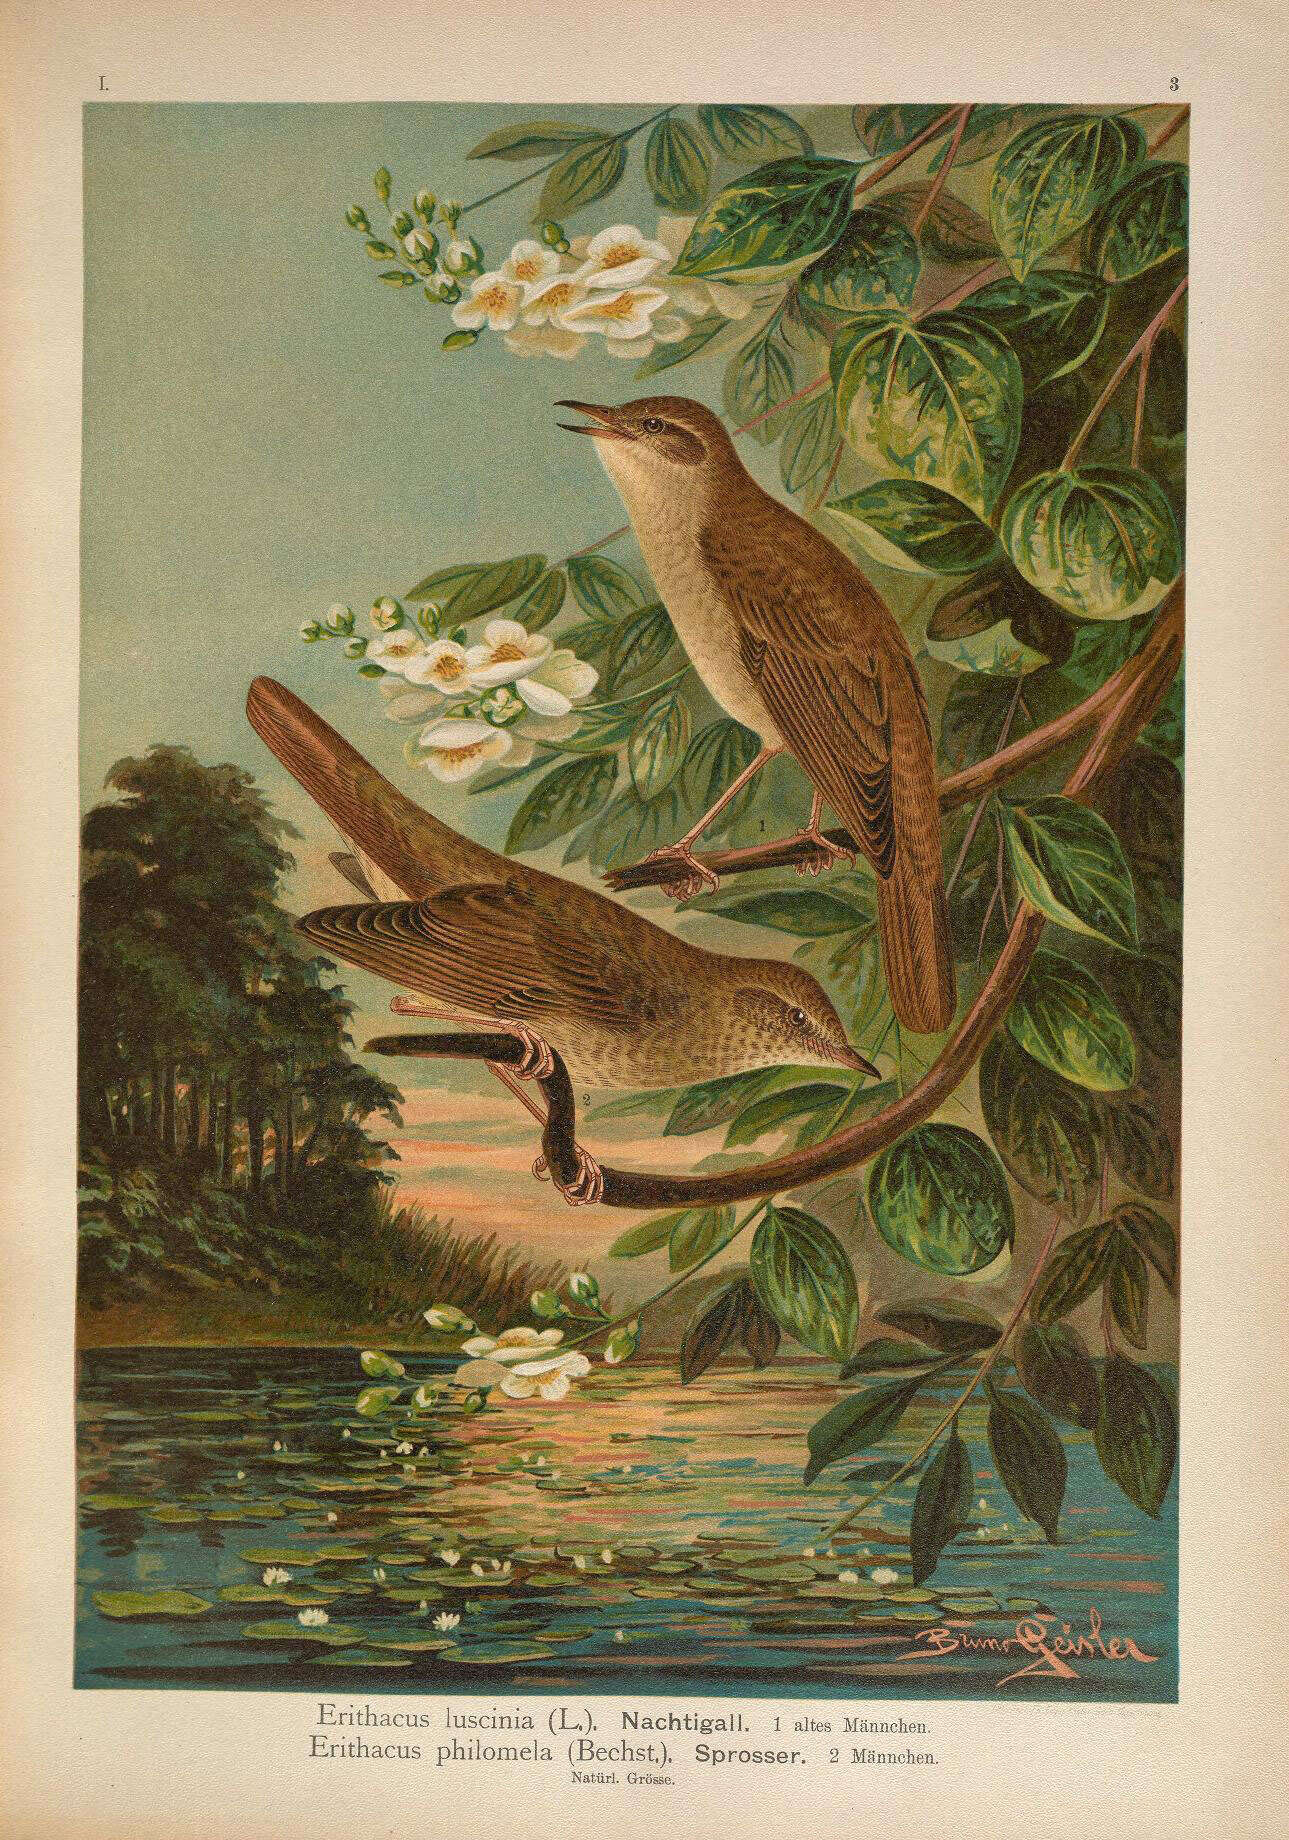 Image of nightingale, common nightingale